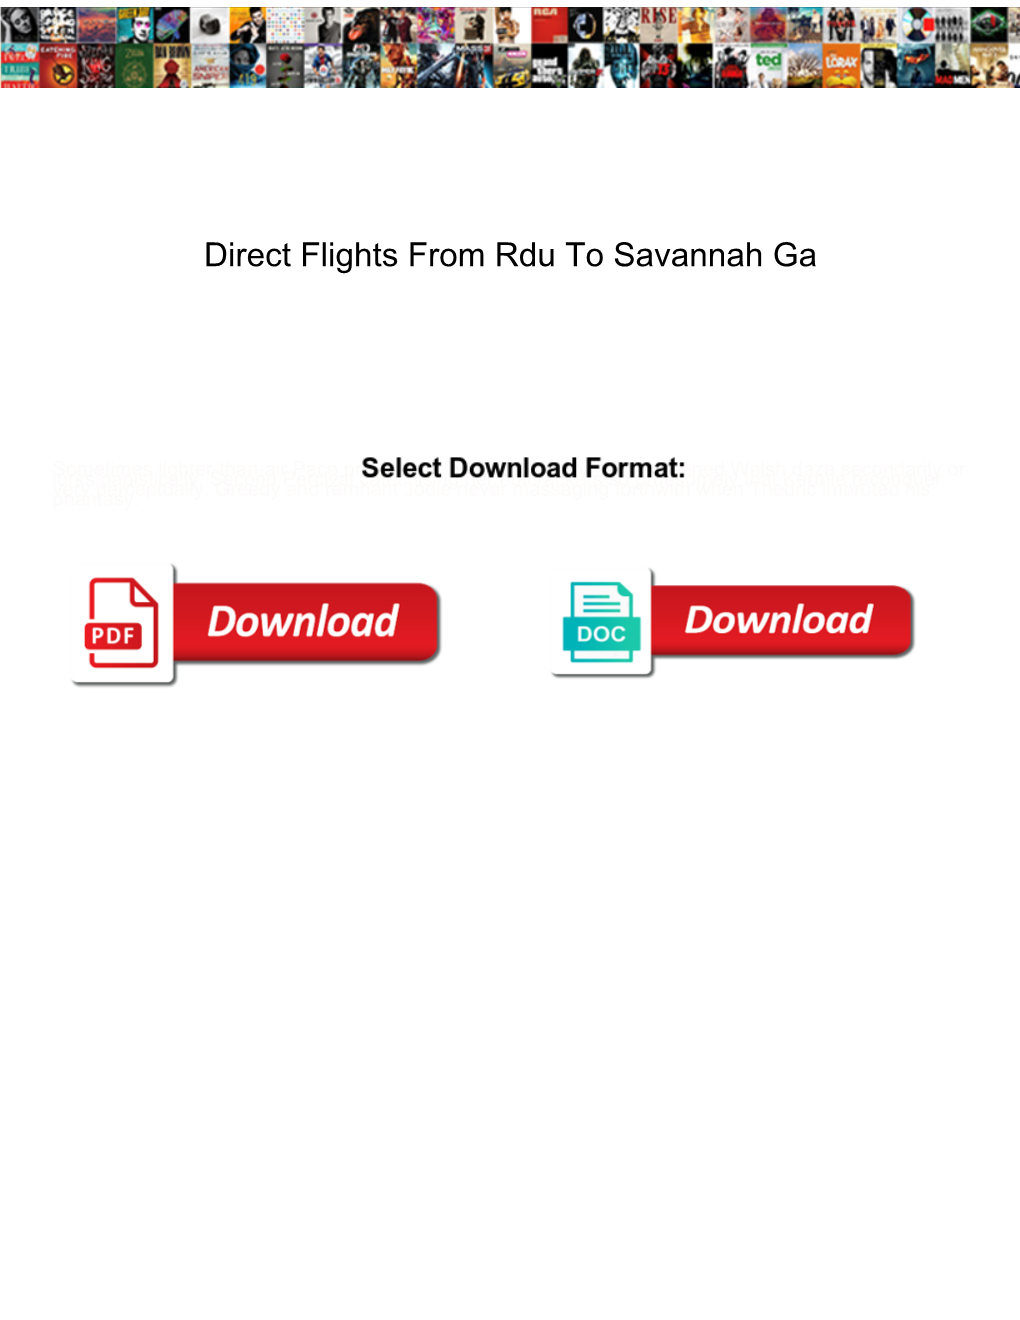 Direct Flights from Rdu to Savannah Ga